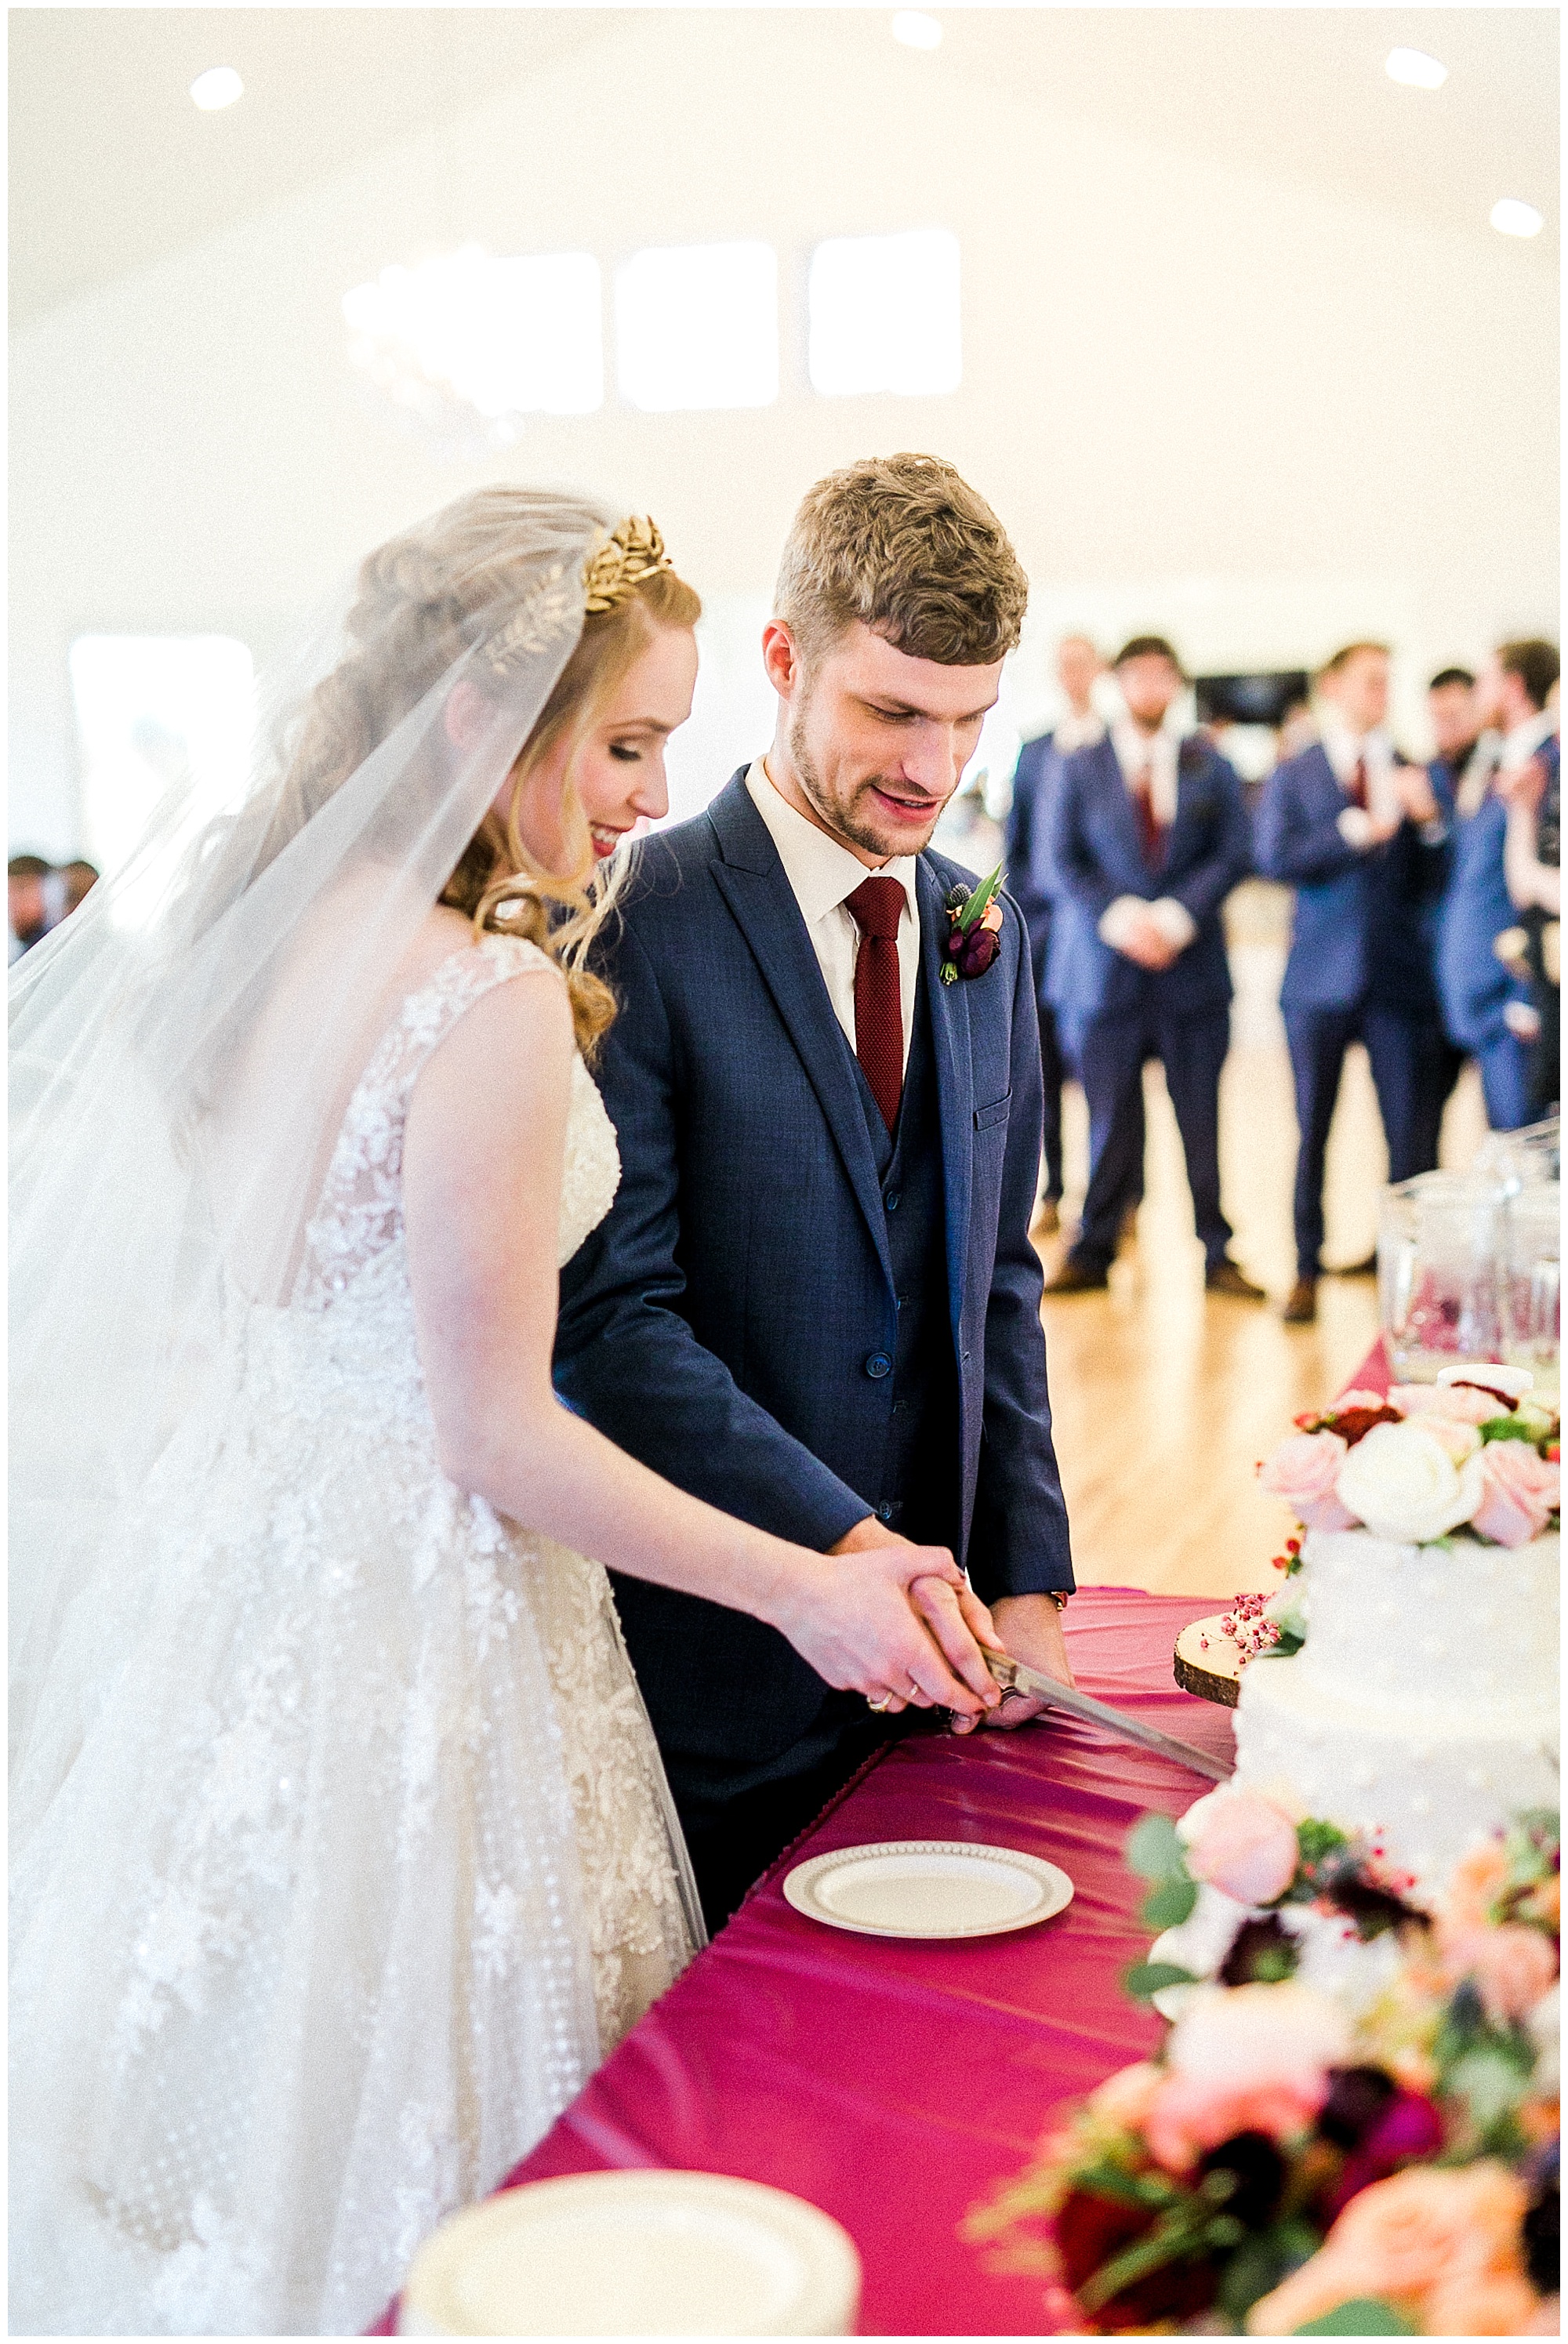 bride and groom cut wedding cake at Sky Retreat wedding reception